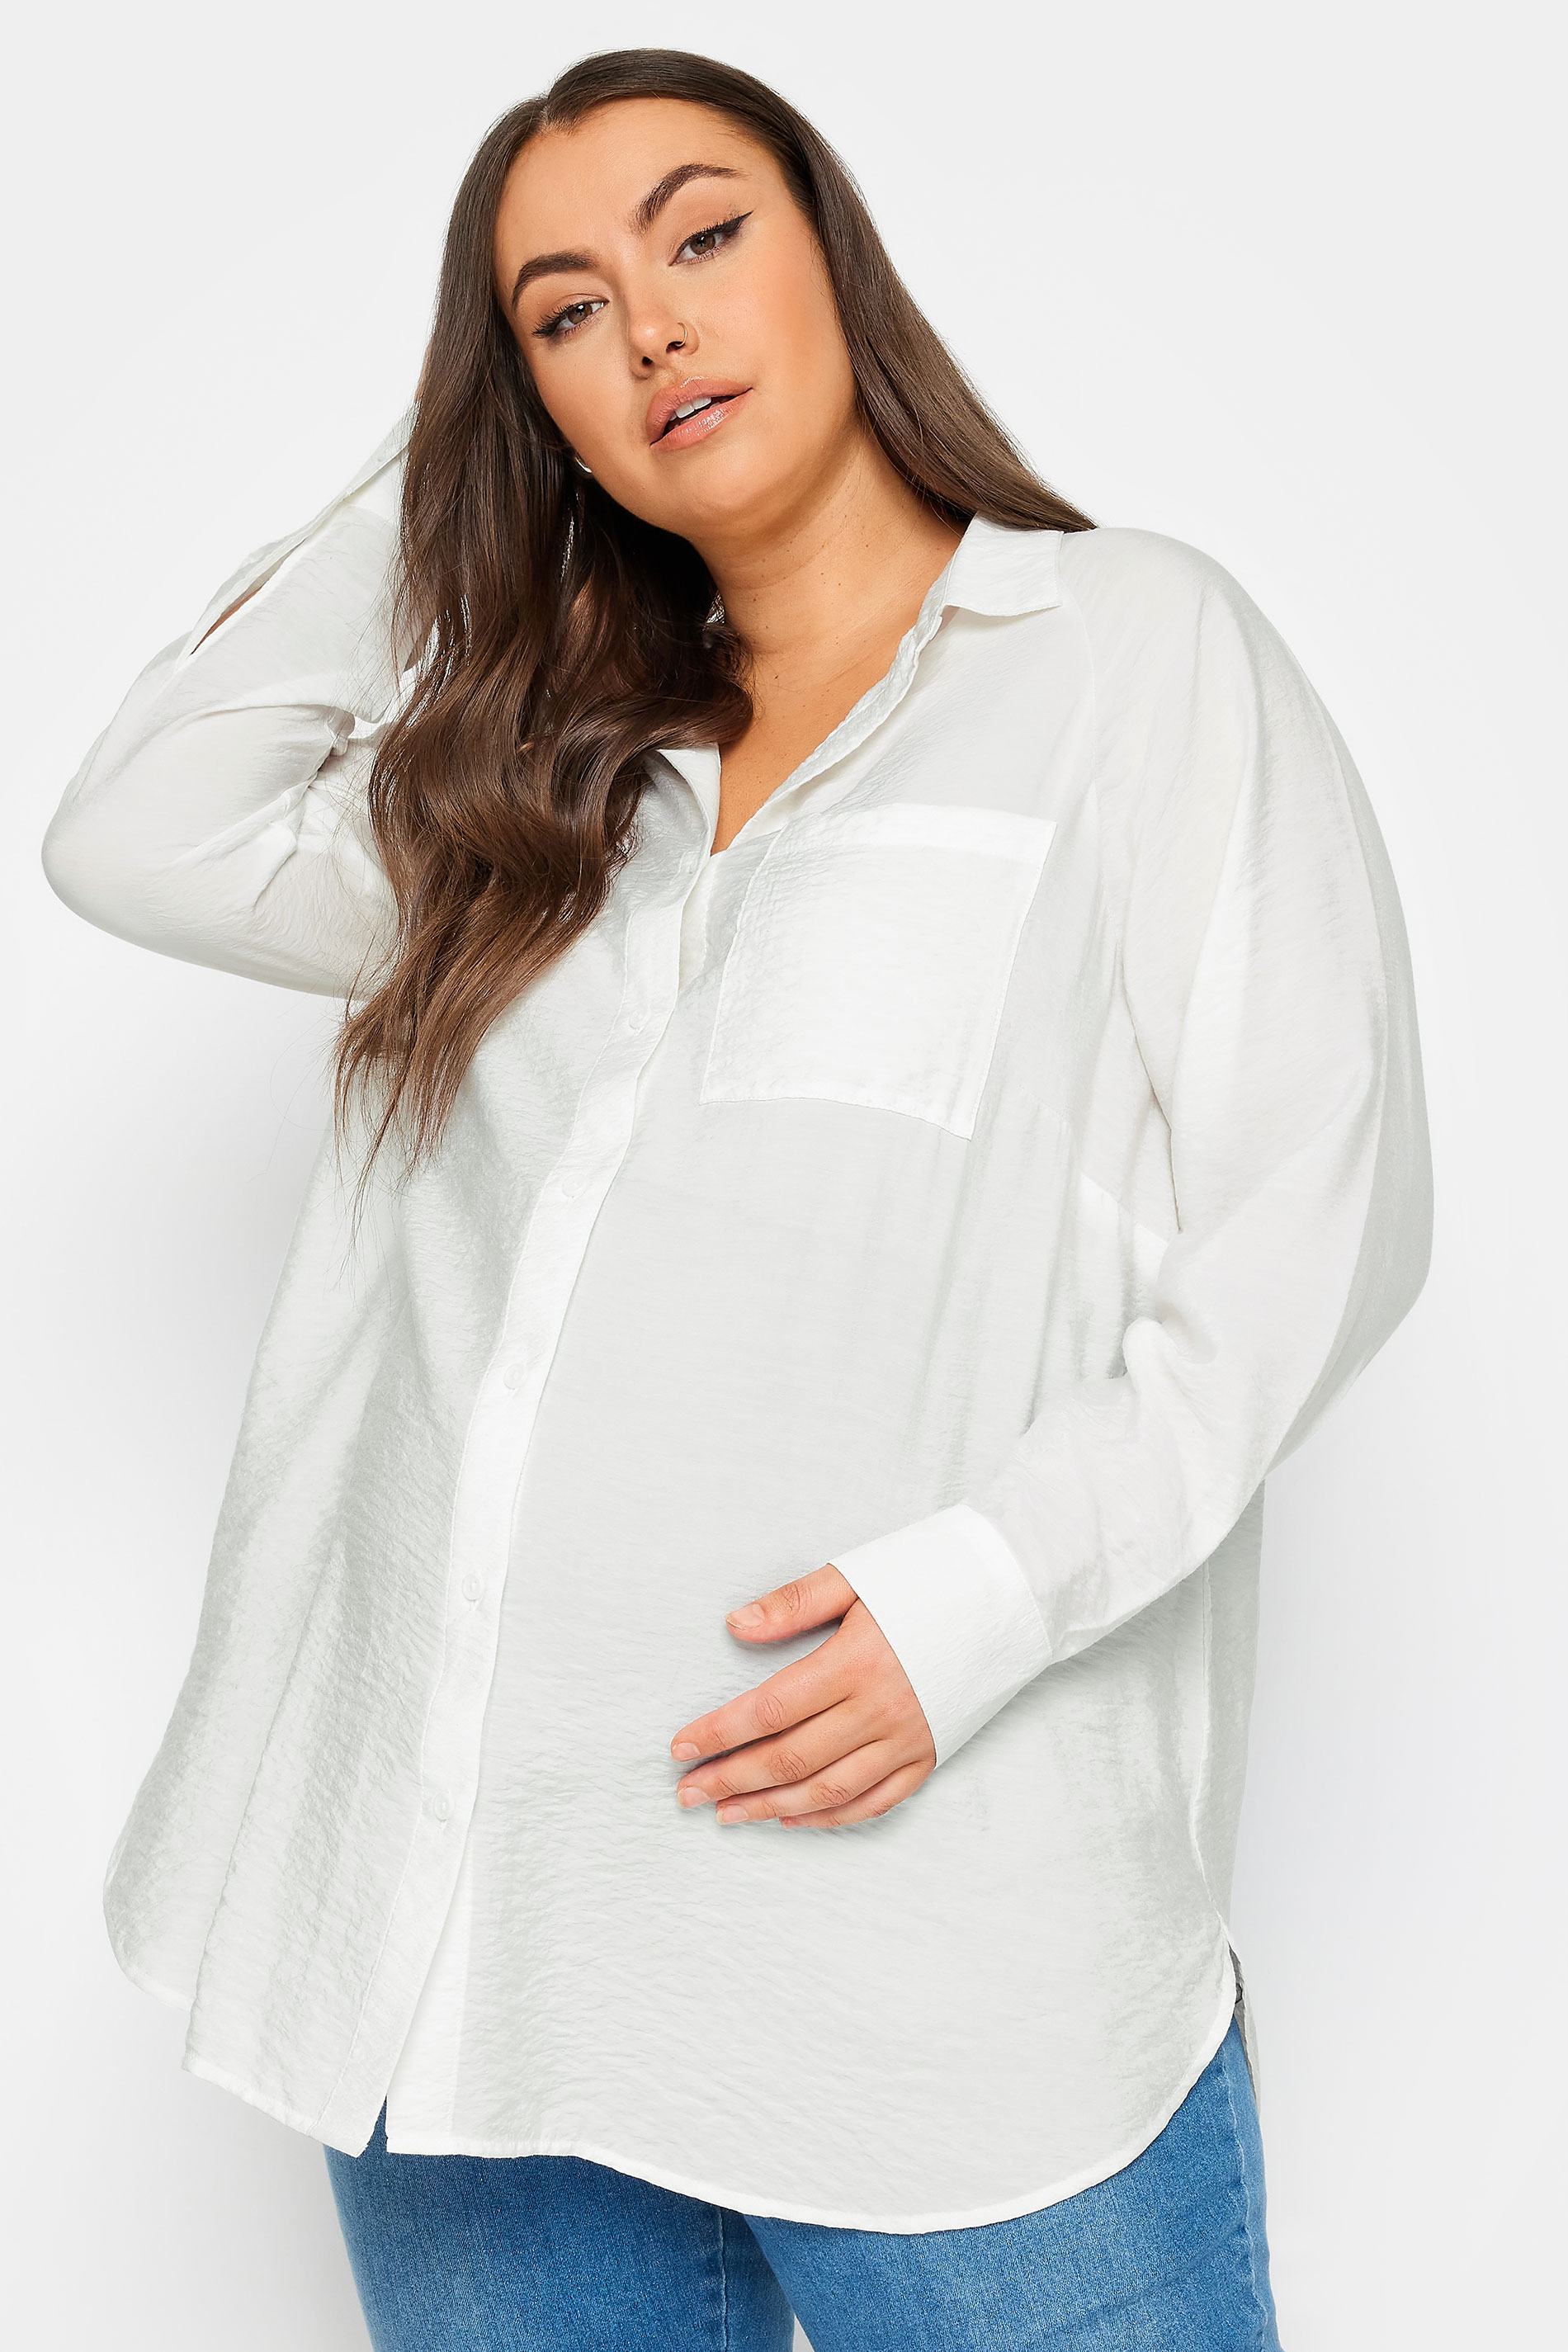 BUMP IT UP MATERNITY Plus Size White Pocket Shirt | Yours Clothing 1